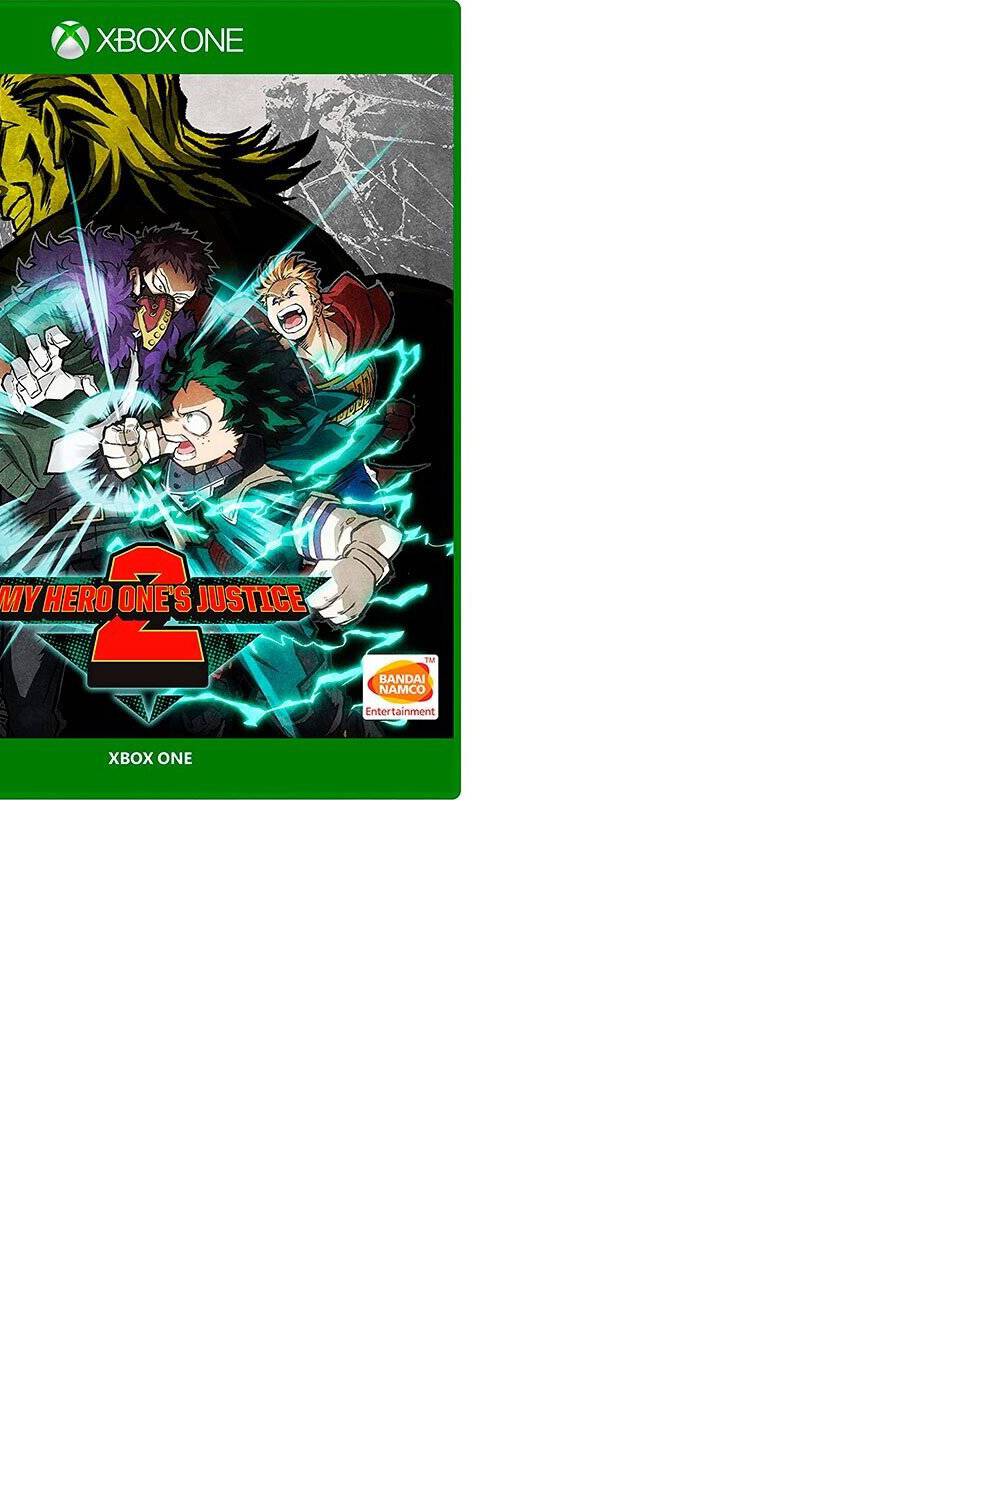 BANDAI NAMCO - My Hero Ones Justice 2 Xbox One